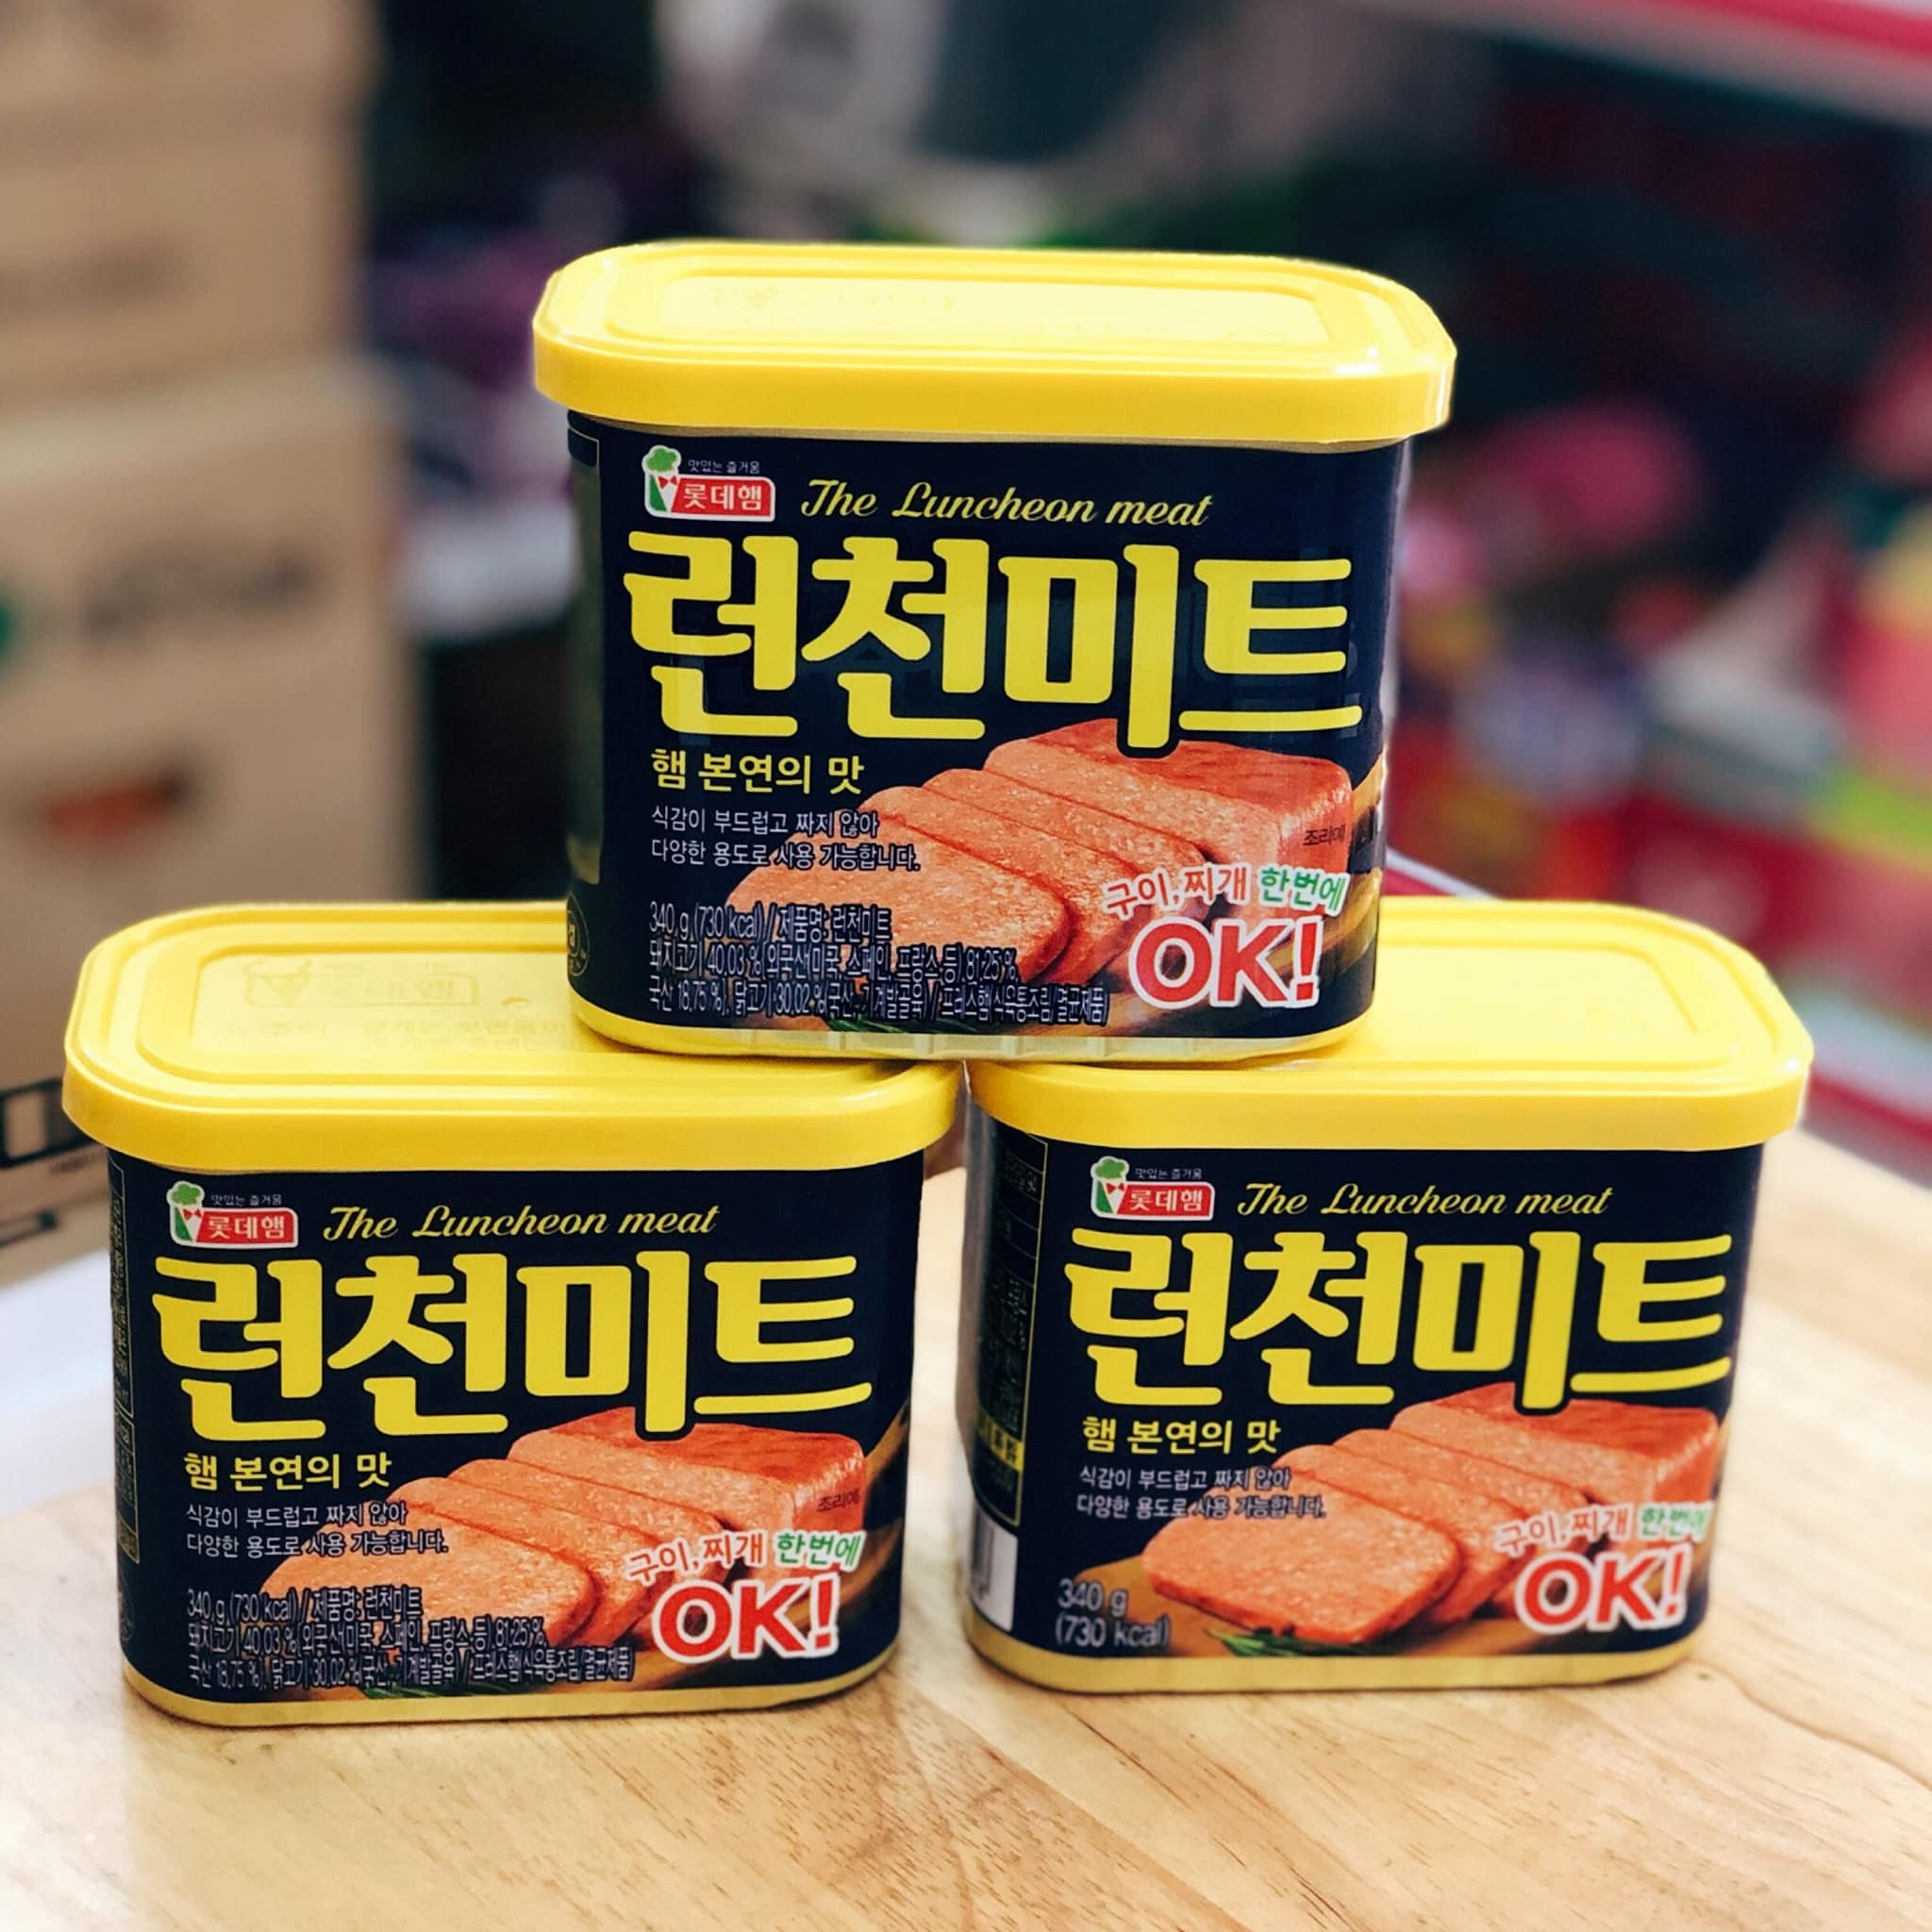 Thịt hộp spam the Luncheon Meat Hàn Quốc 340g